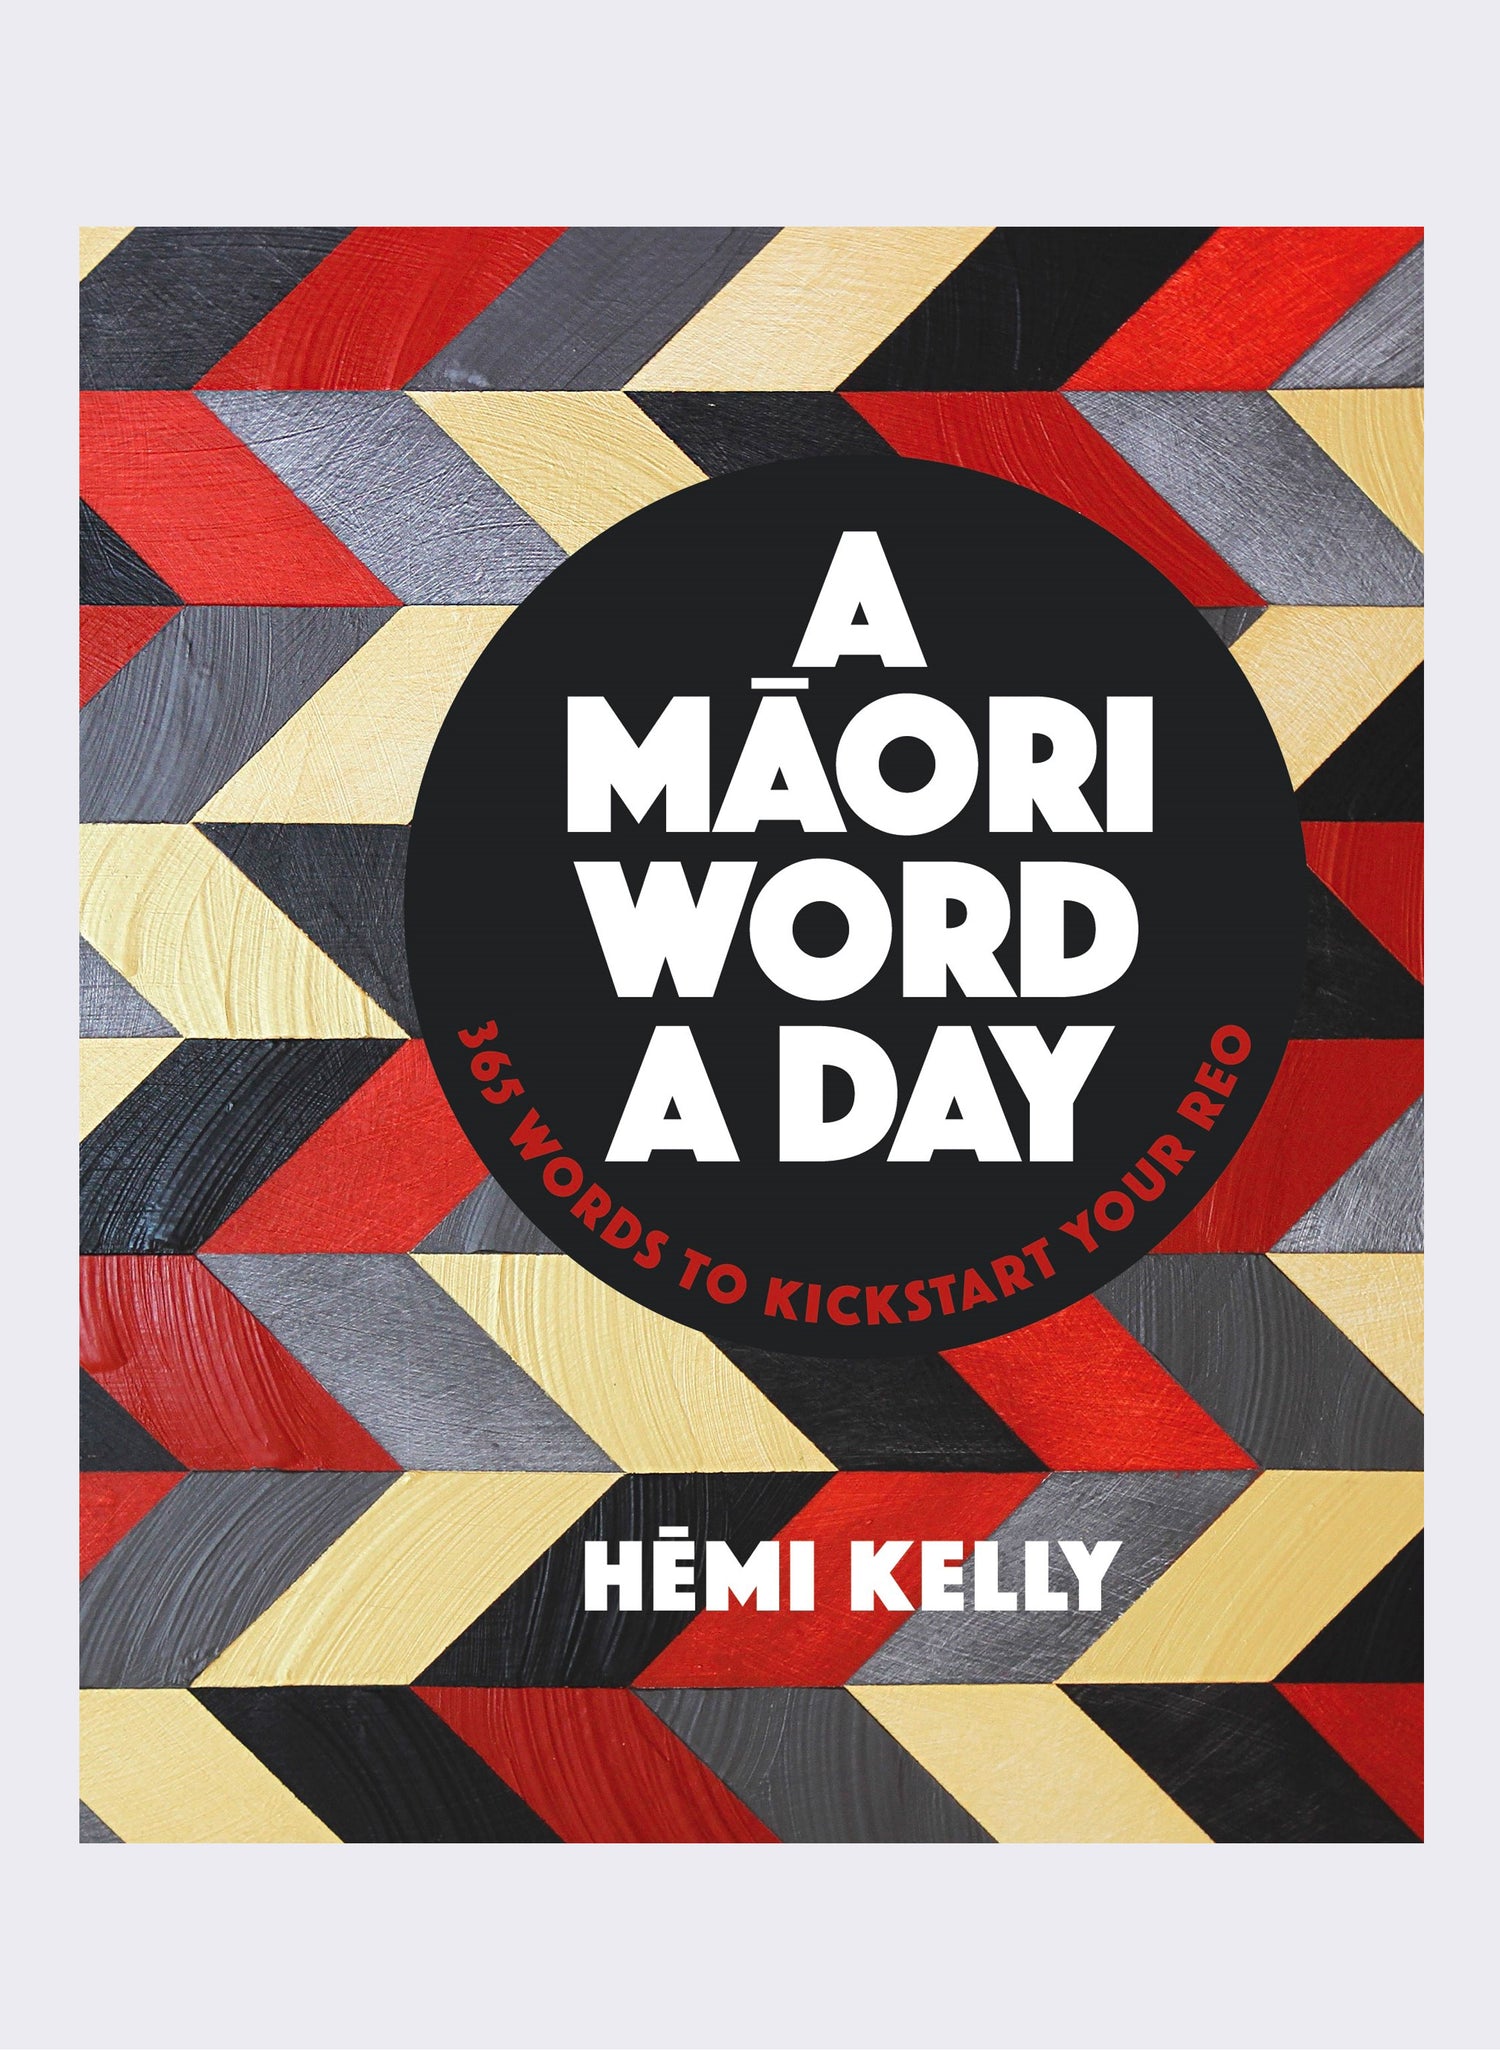 A Maori Word a Day by Hemi Kelly